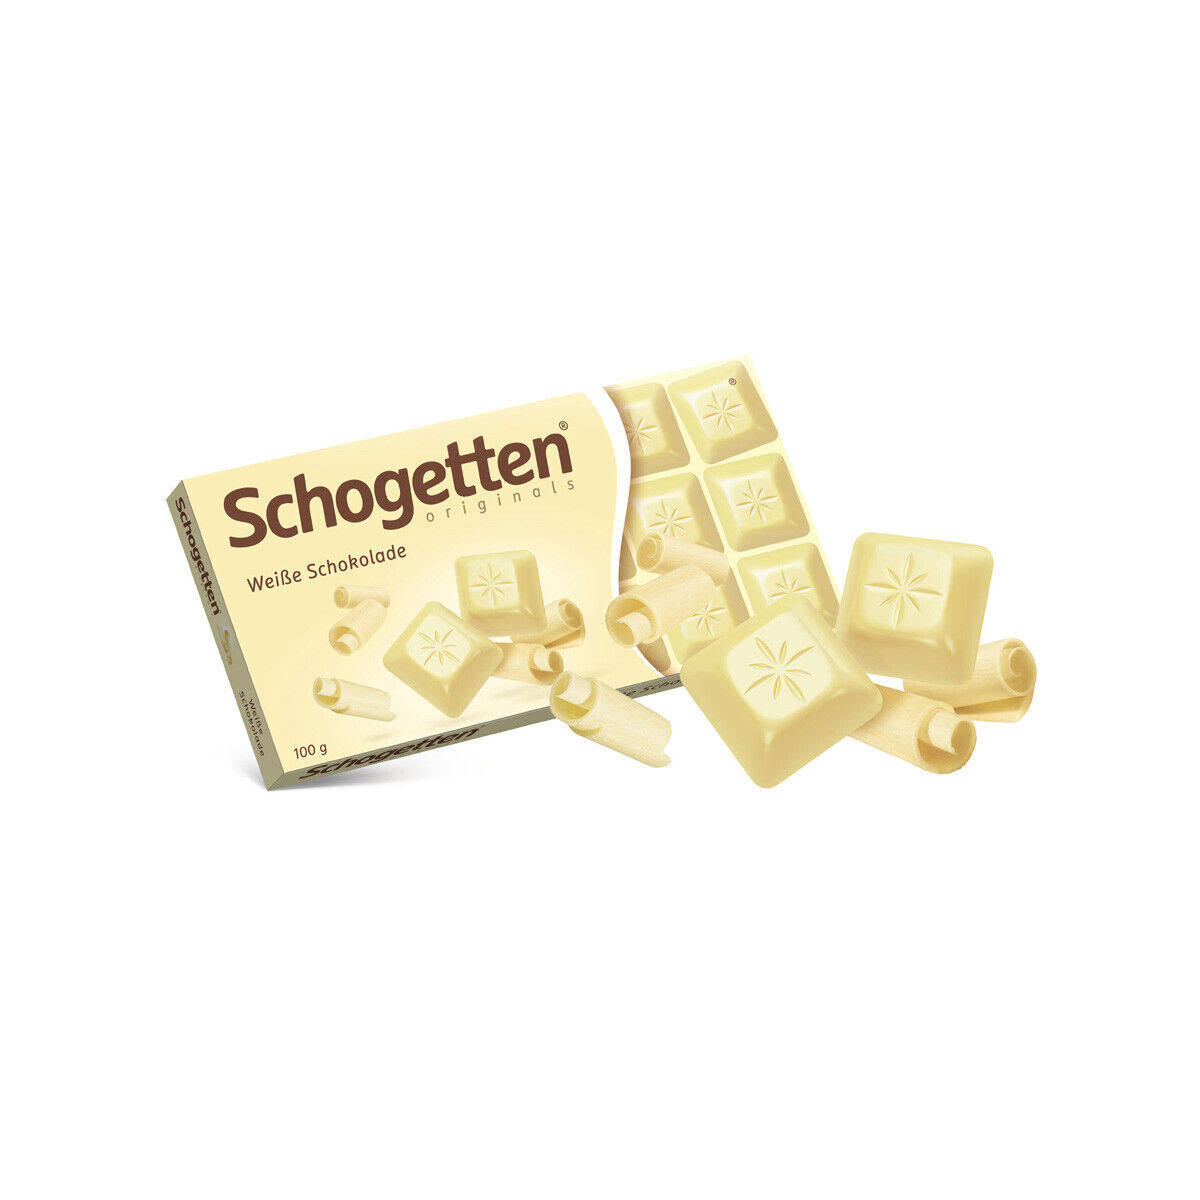 Shogetten White Chocolate Bar - 100g, 3pk